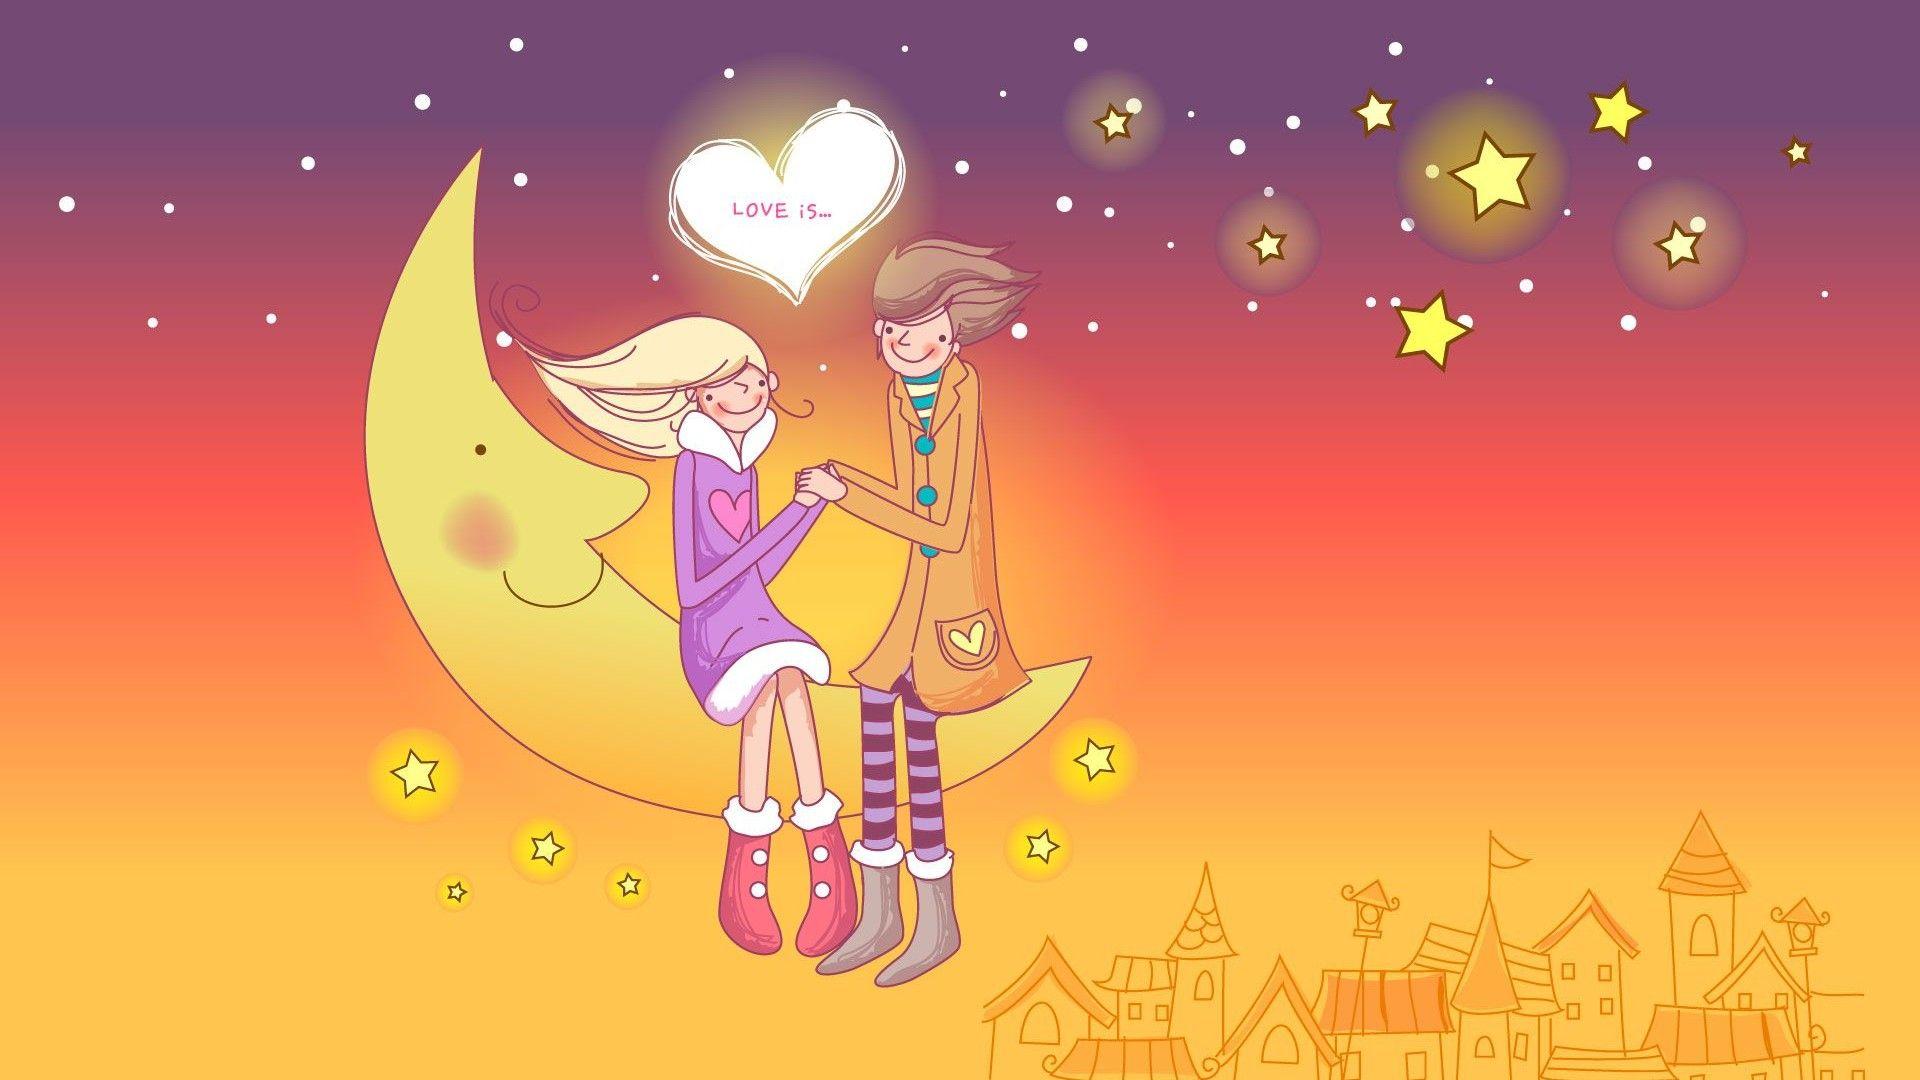 Valentine Wallpaper Animated. Best HD Wallpaper. Dibujos de amor, Fondos de pantalla amor, Fondos de pantalla bonitos